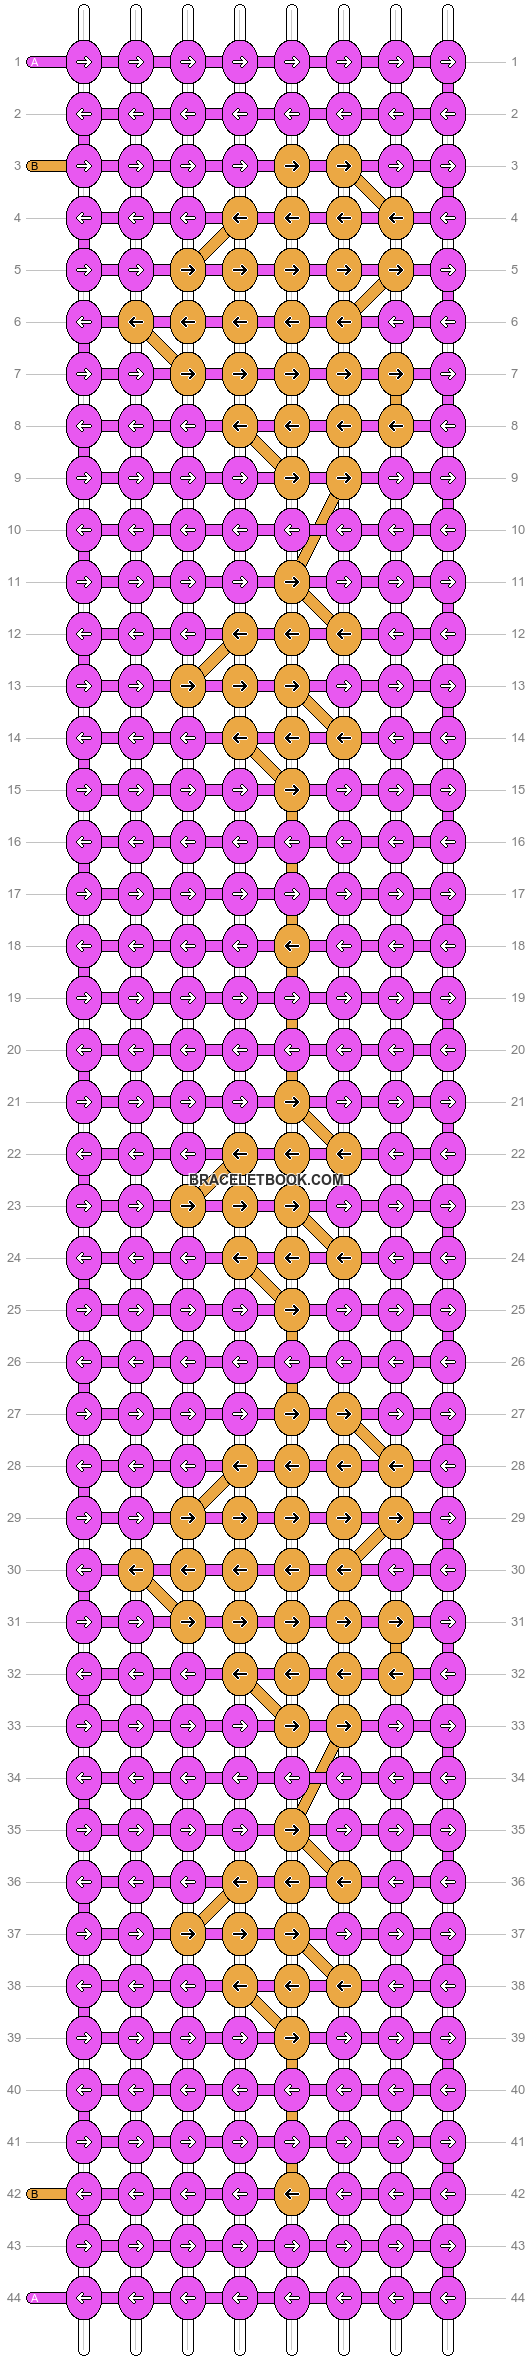 Alpha pattern #27159 variation #14925 pattern